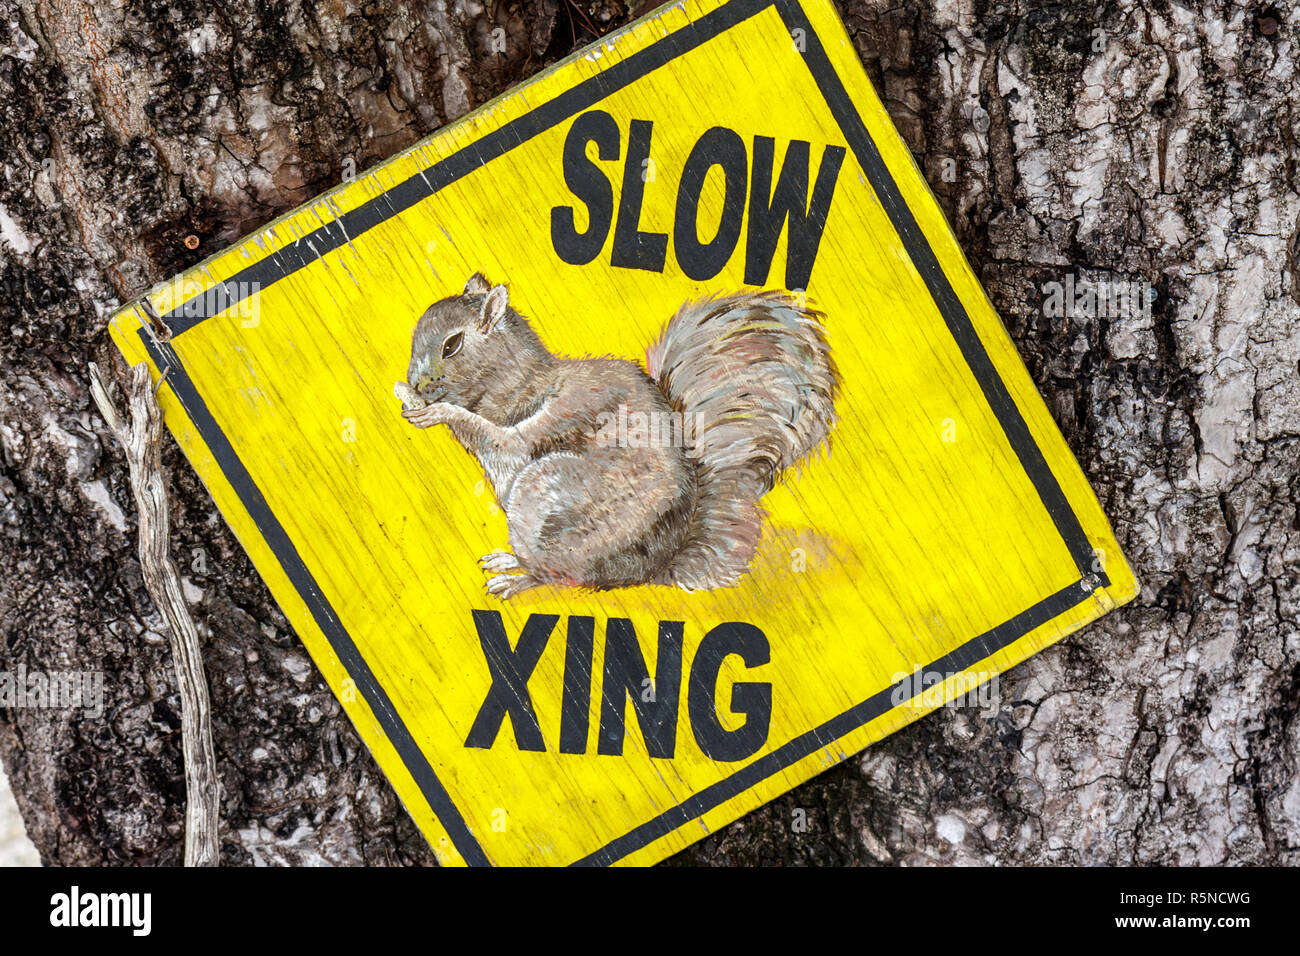 Florida Key Largo Florida Keys,US highway Route 1,Overseas Highway,traffic,road,sign,slow,squirrel crossing,slow,FL090922048 Stock Photo